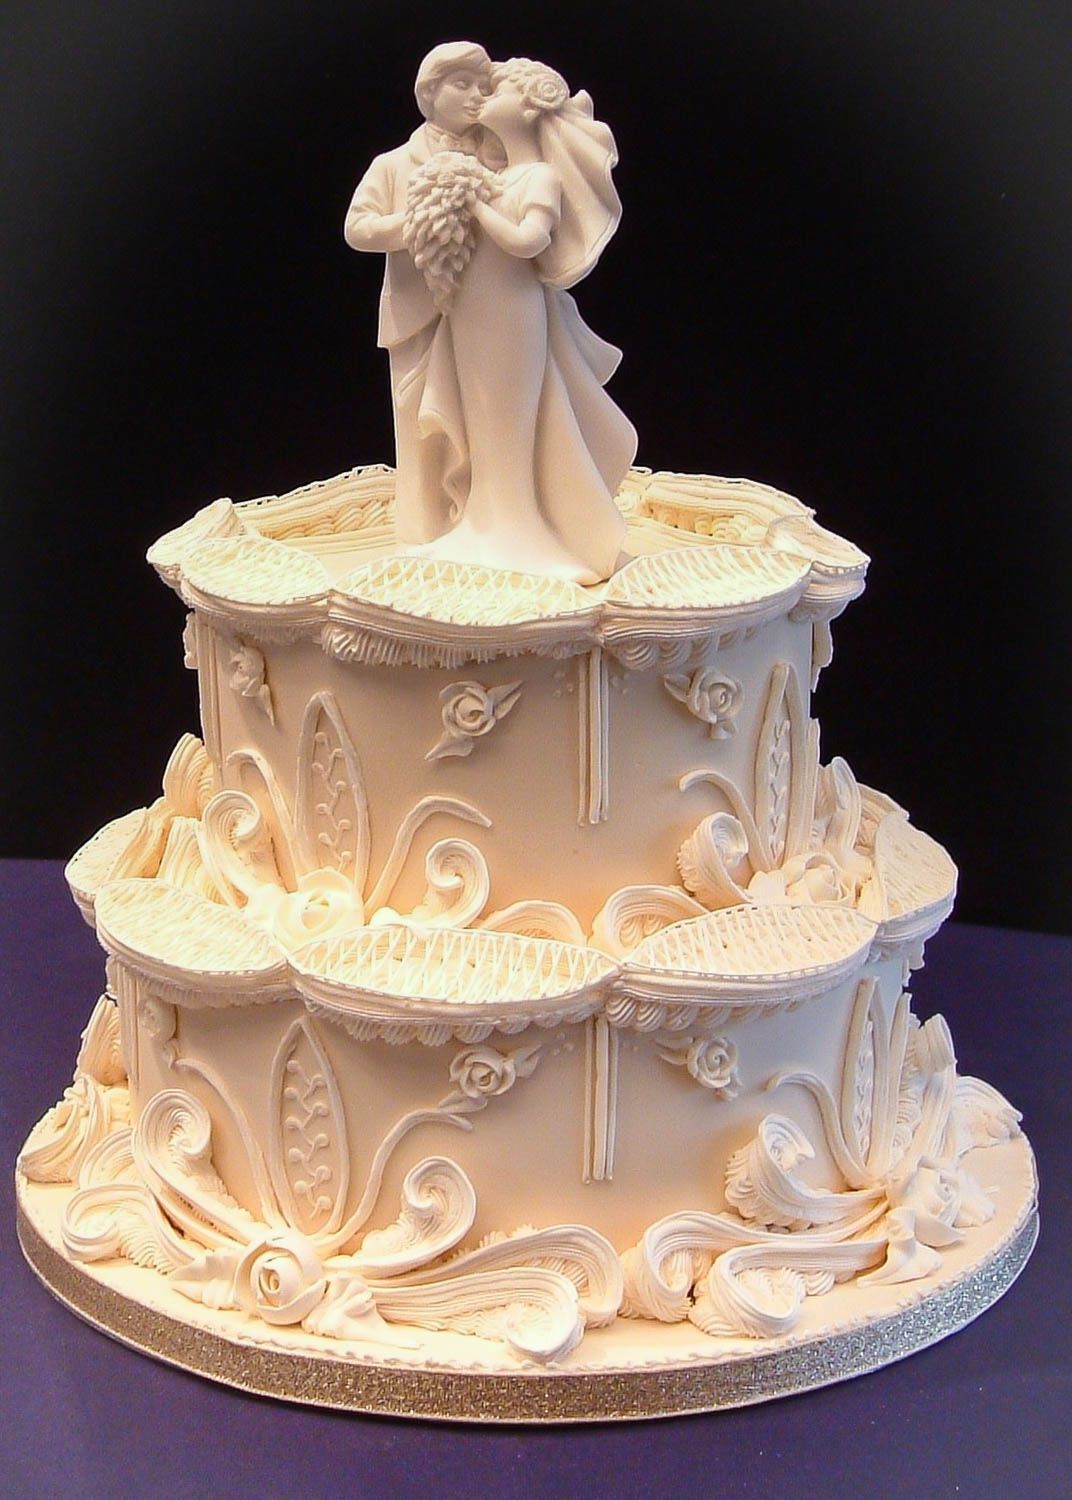 Regency Cakes-Image-91